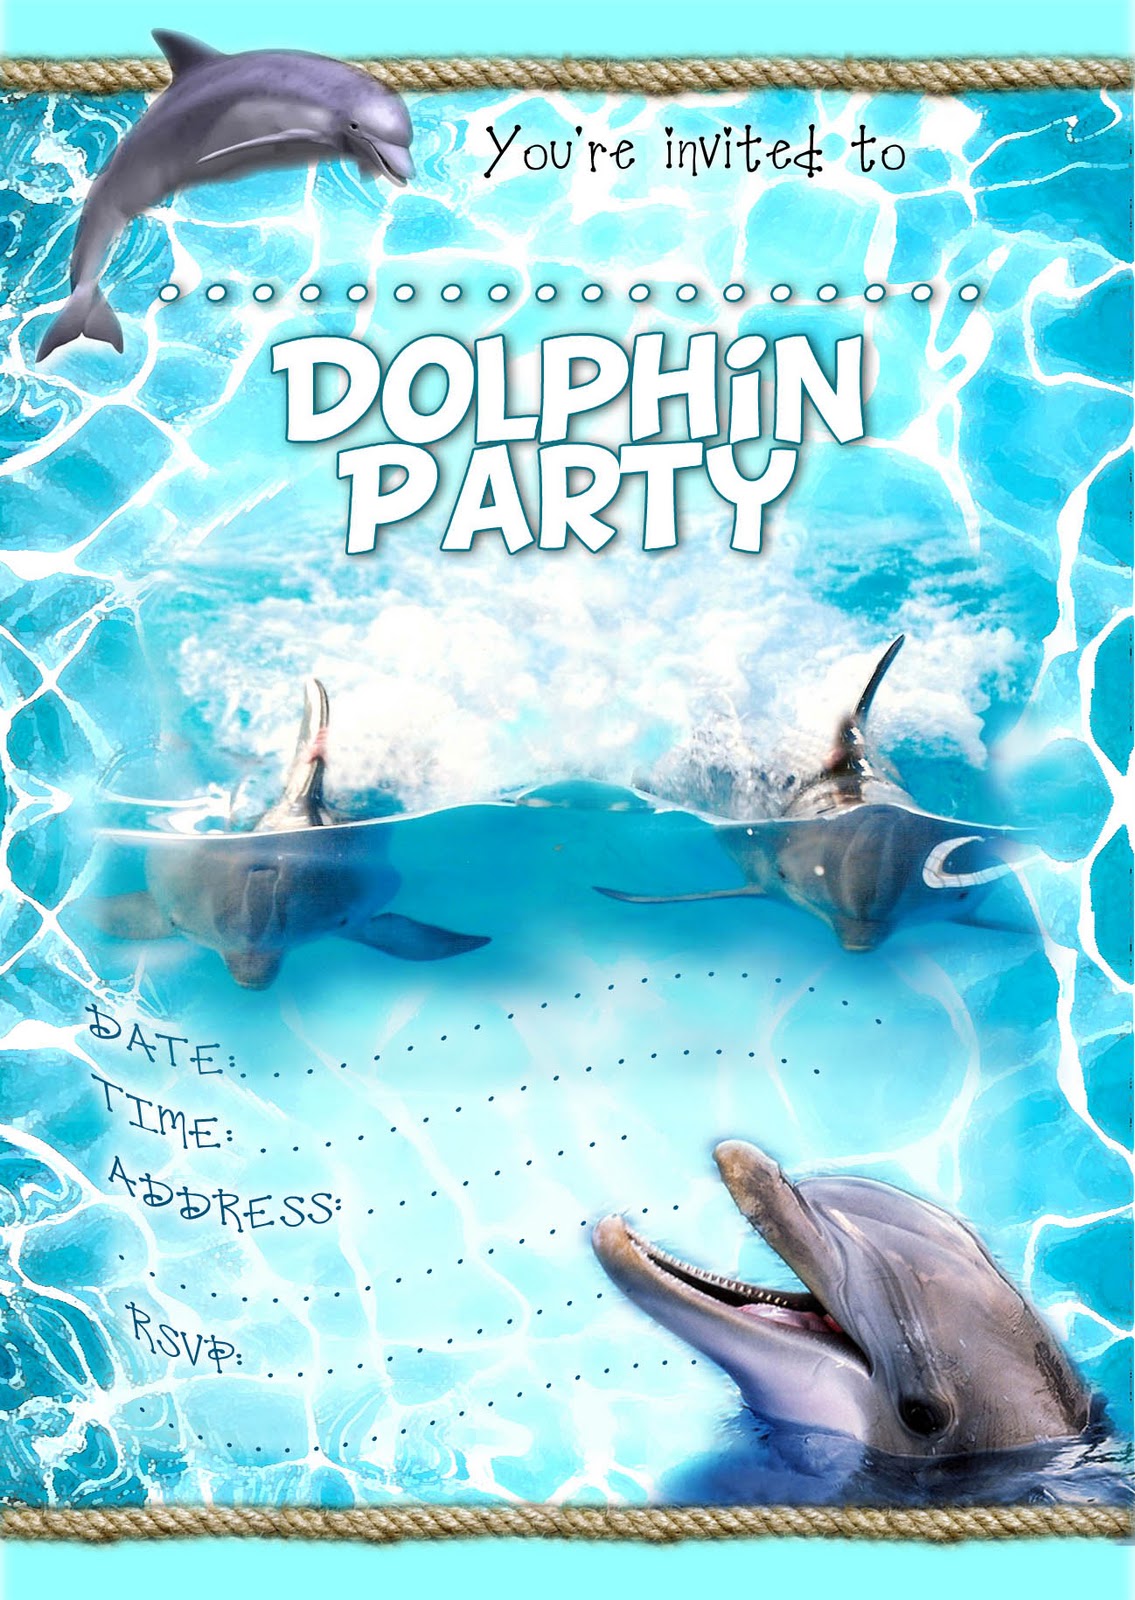 FREE Kids Party Invitations: Dolphin Party Invitation1135 x 1600